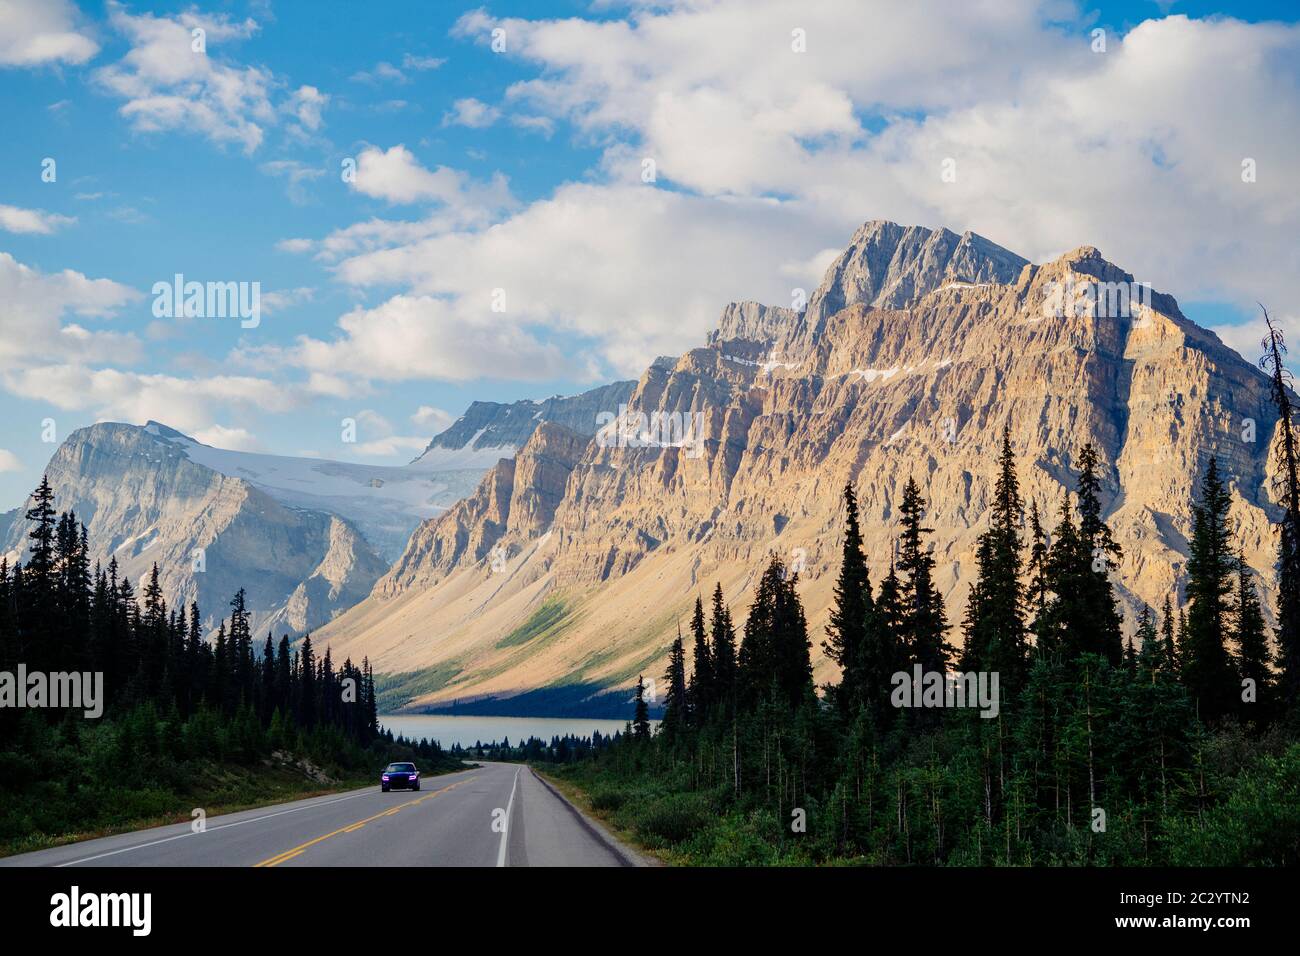 Road passing through scenic landscape of Banff National Park, Banff, Alberta, Canada Stock Photo